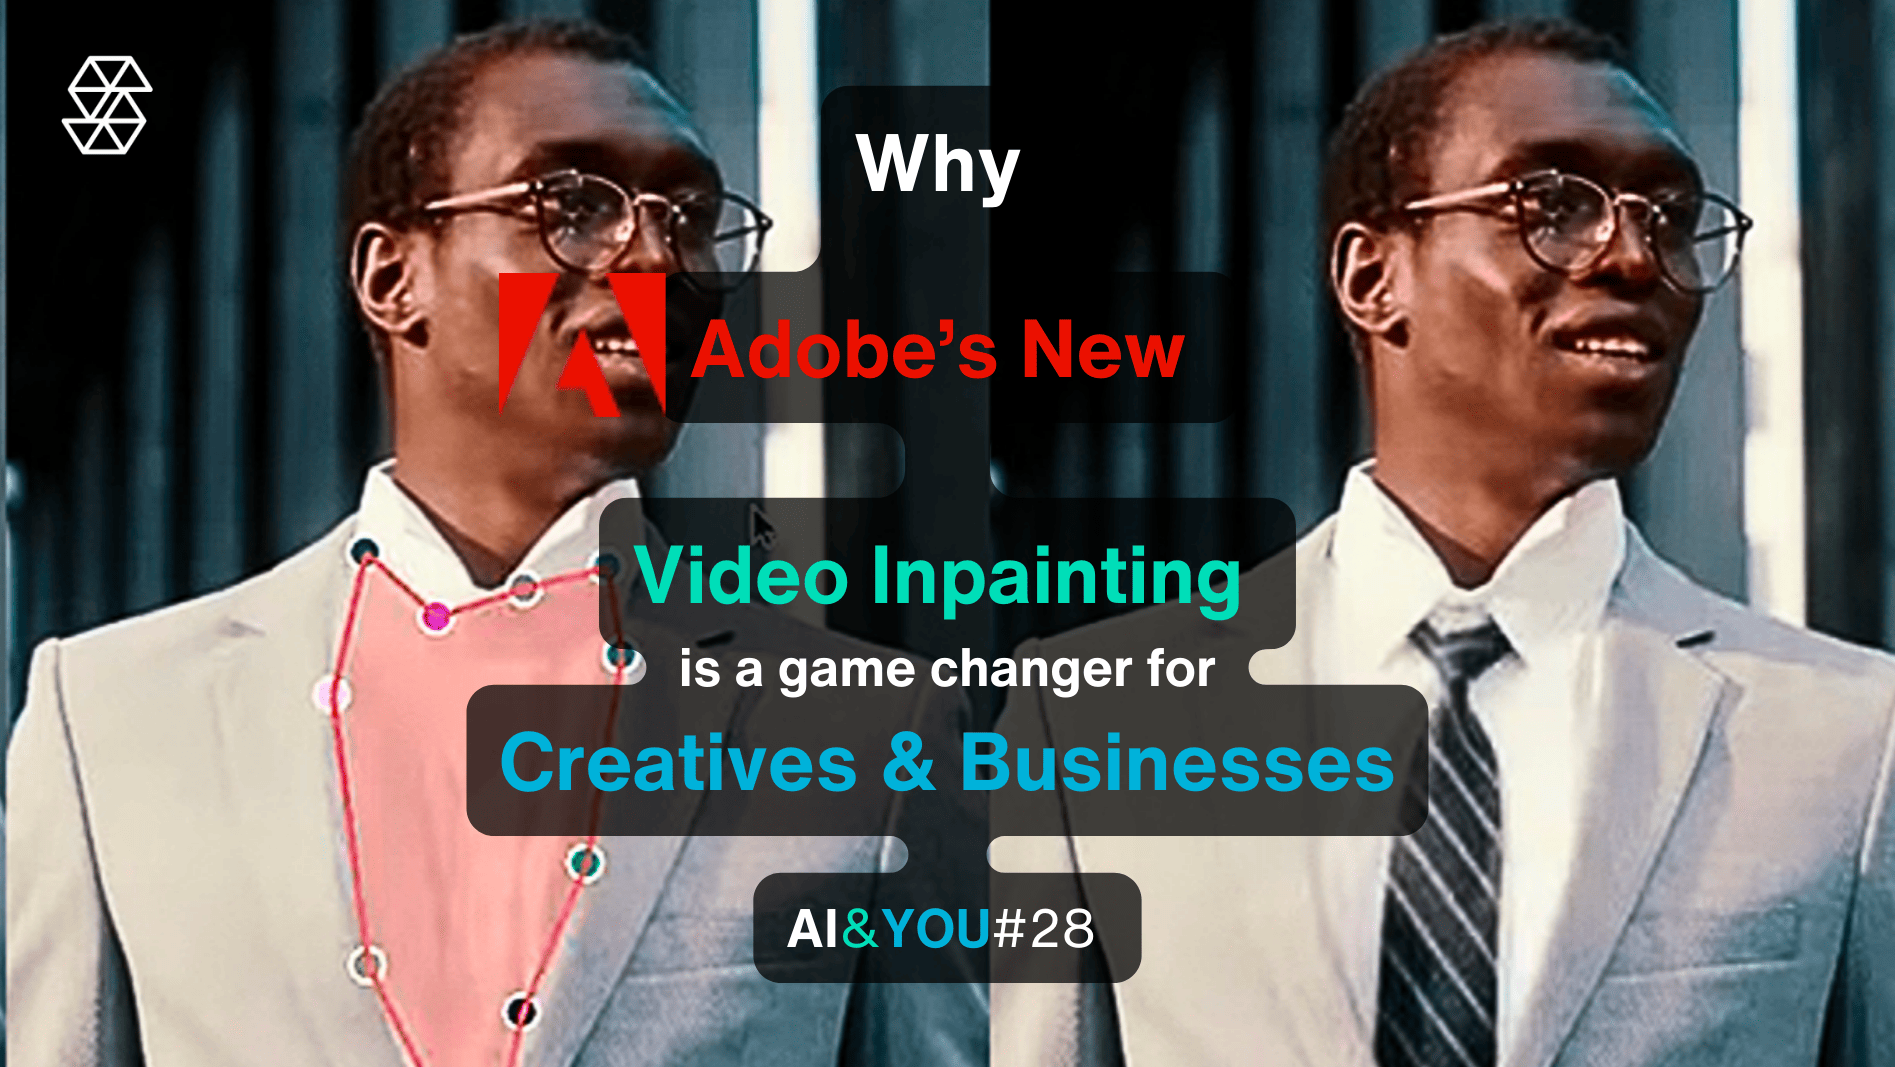 AI&YOU#28: O "Project Fast Fill" da Adobe revoluciona a pintura de vídeo para criadores e empresas